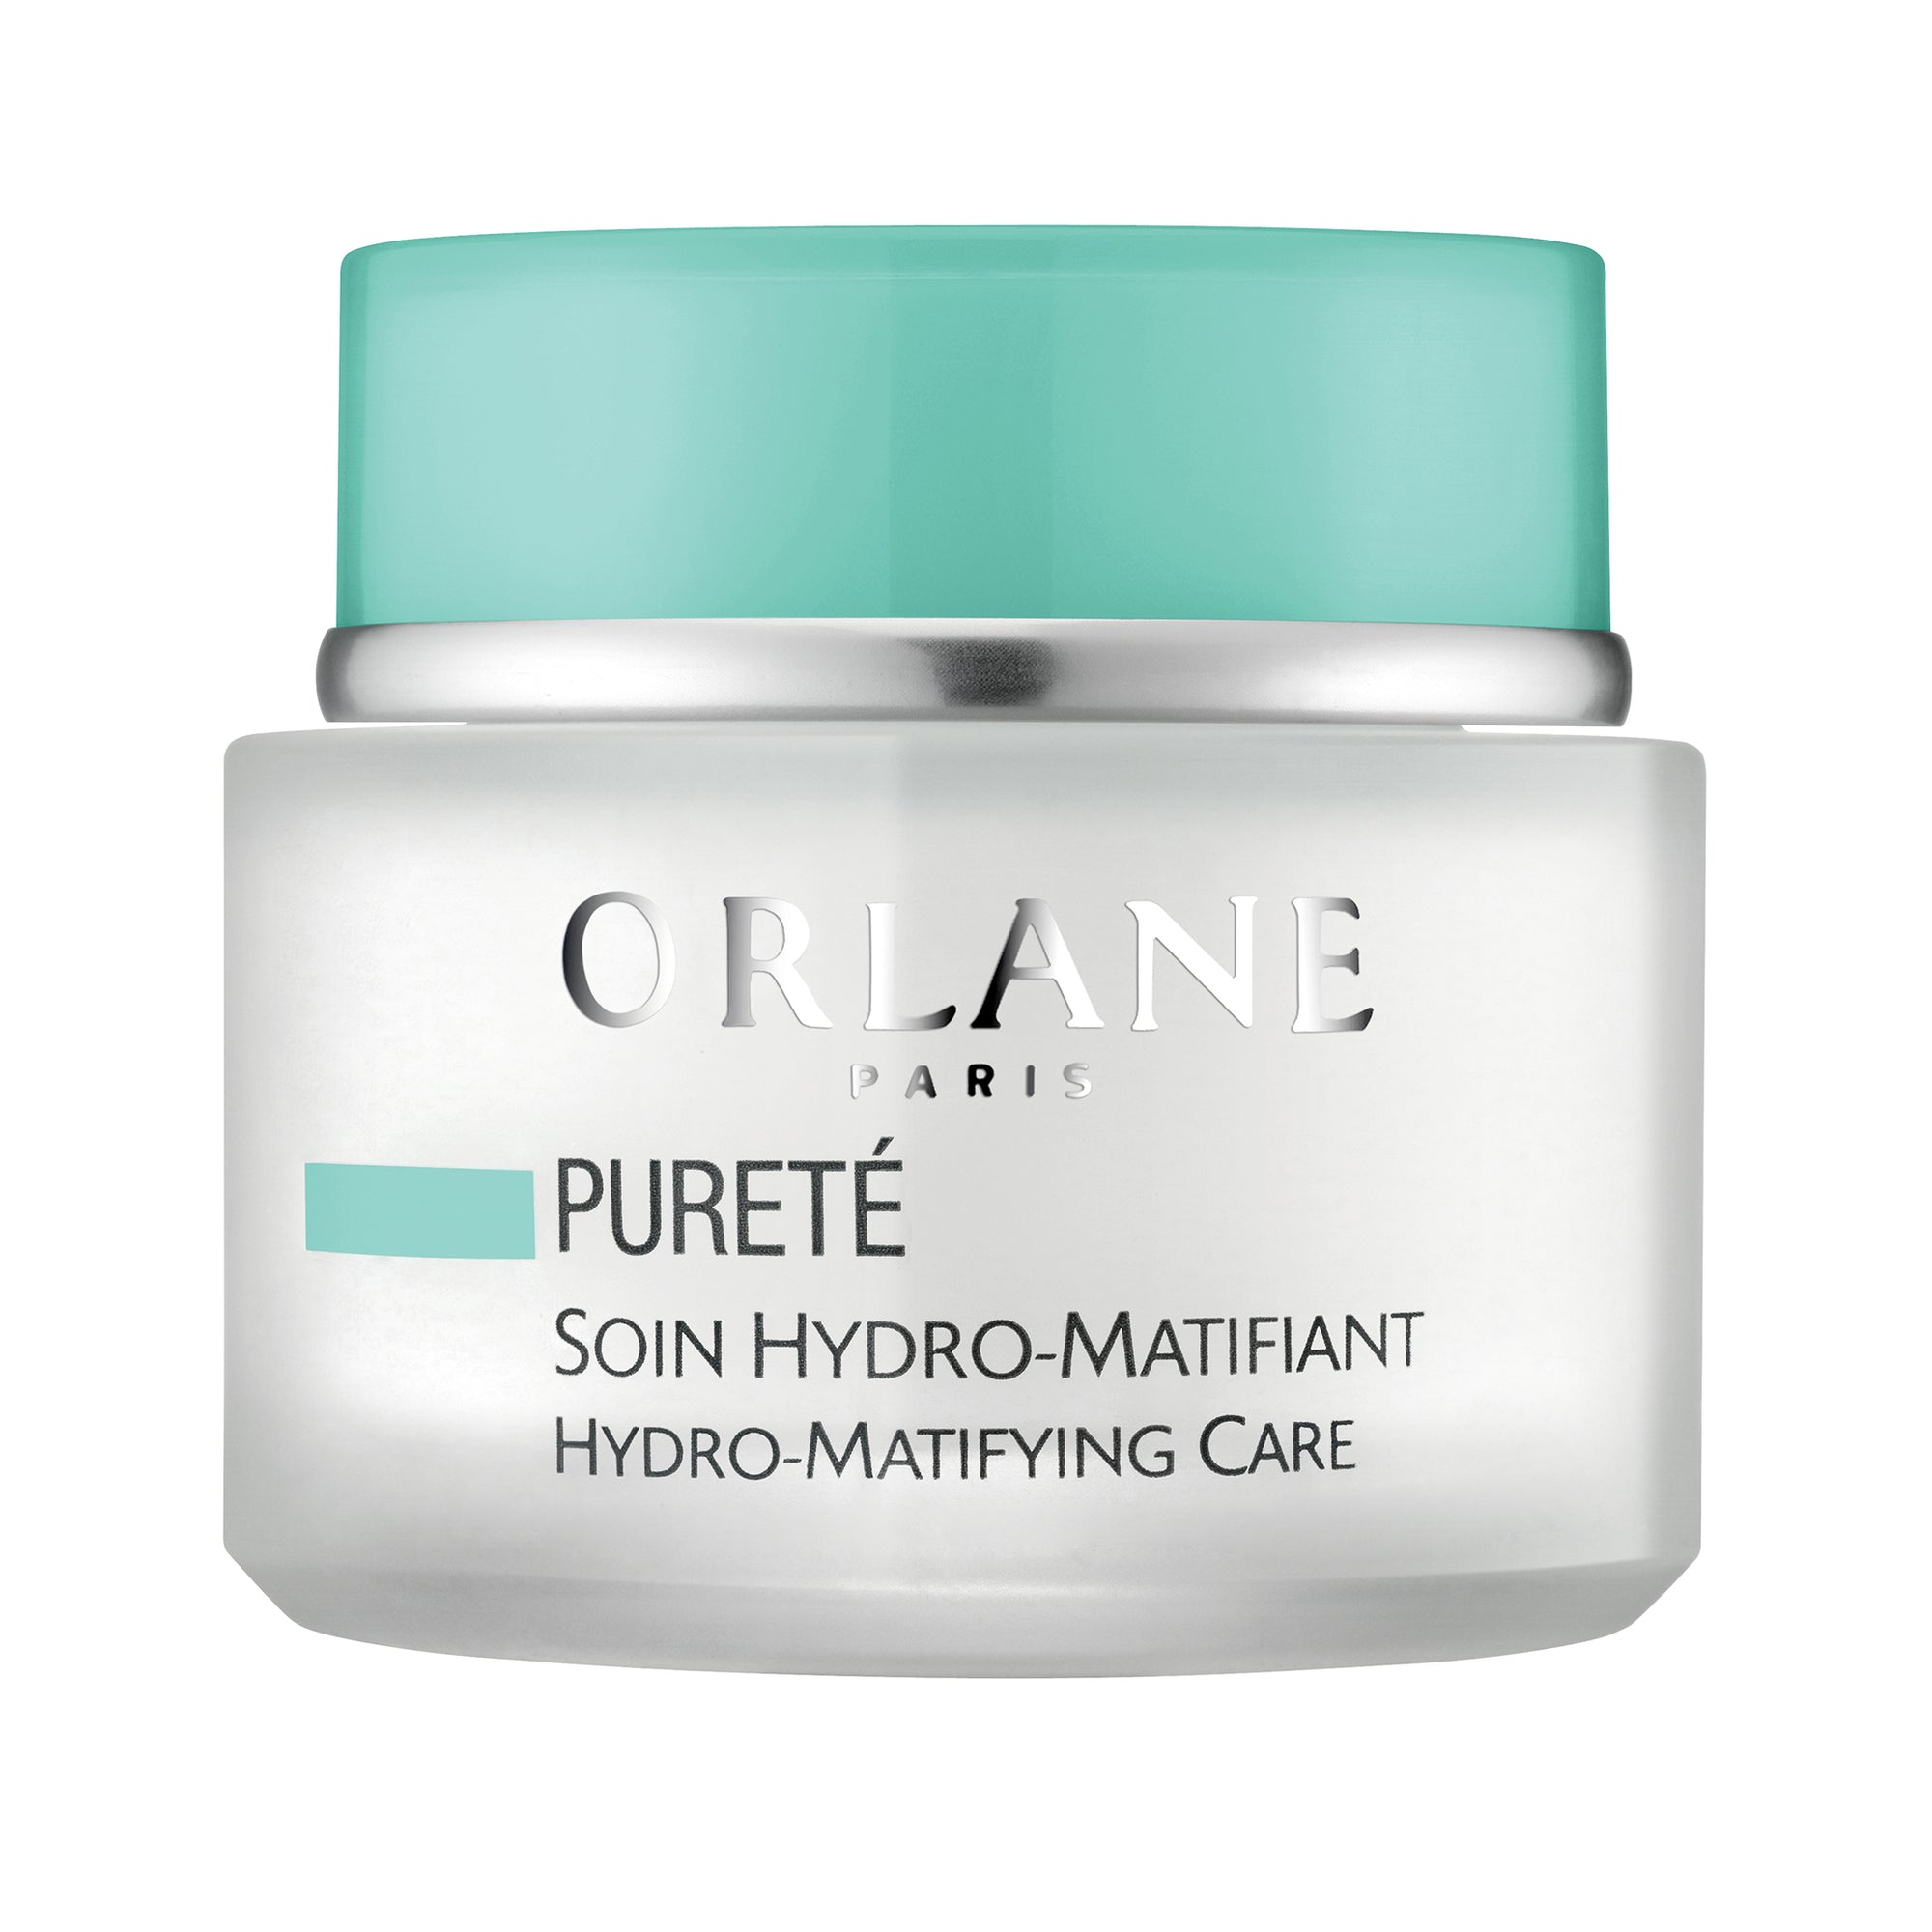 Orlane Pureté Hydro-Matifying Care